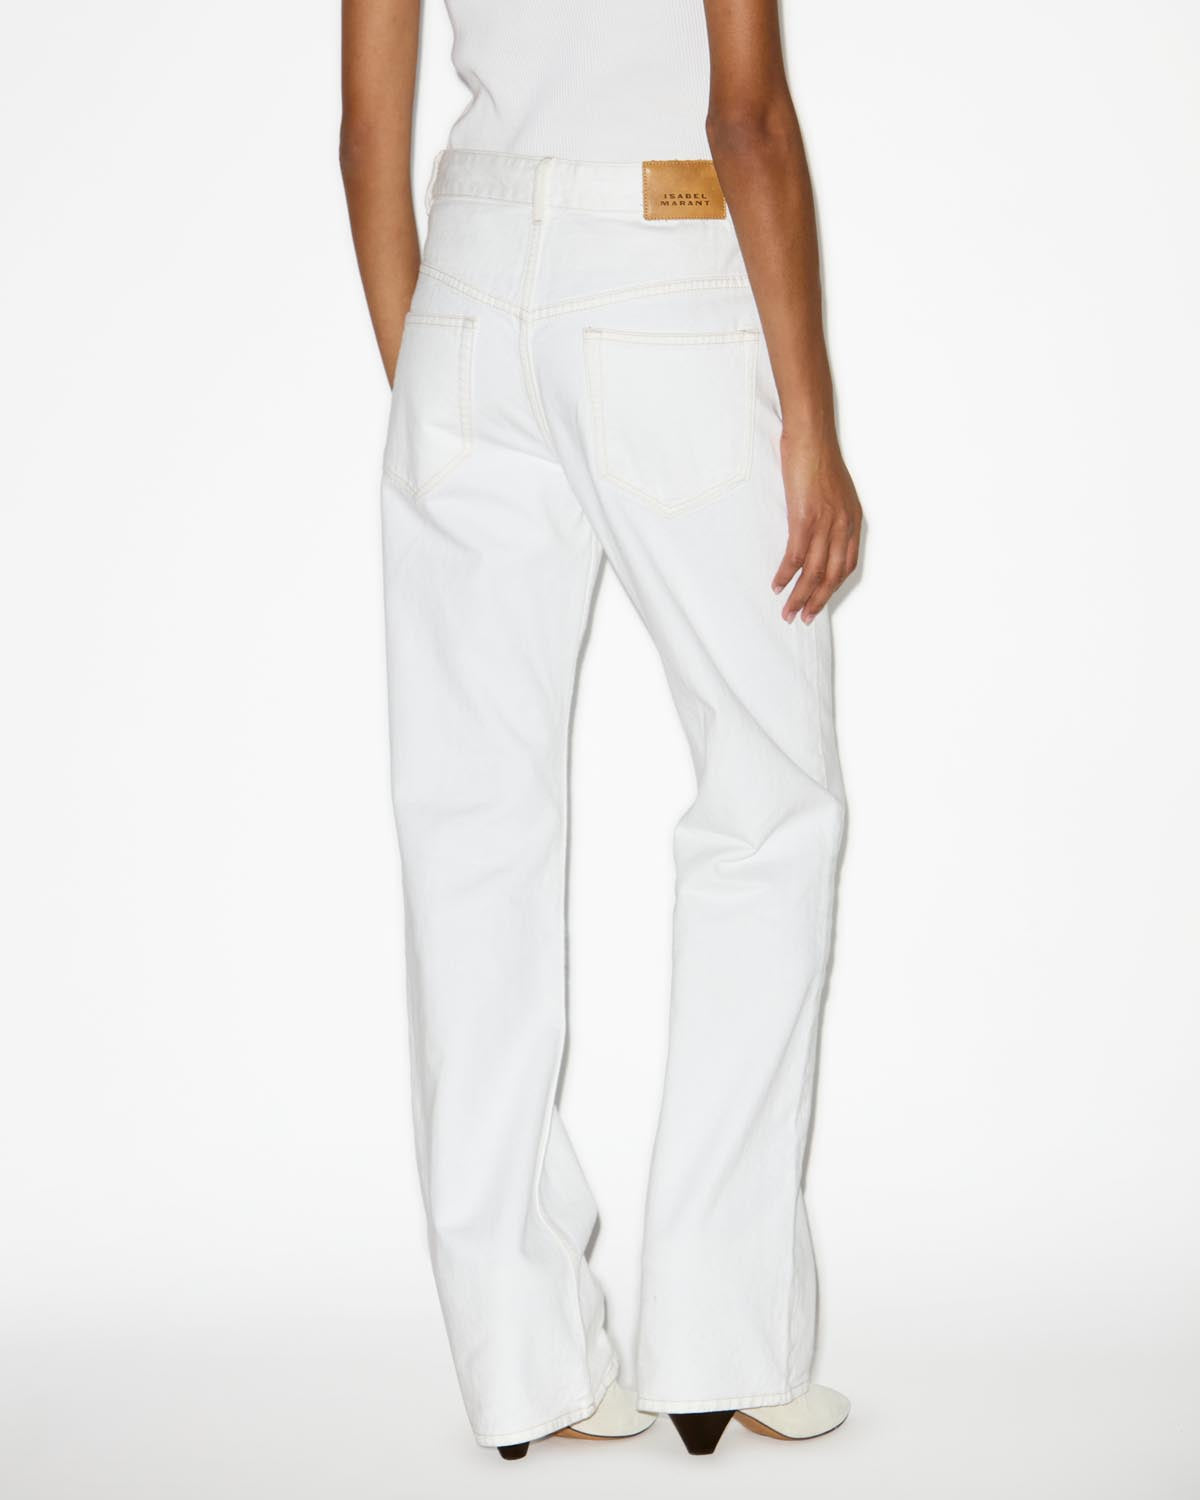 Belvira jeans Woman Bianco 3